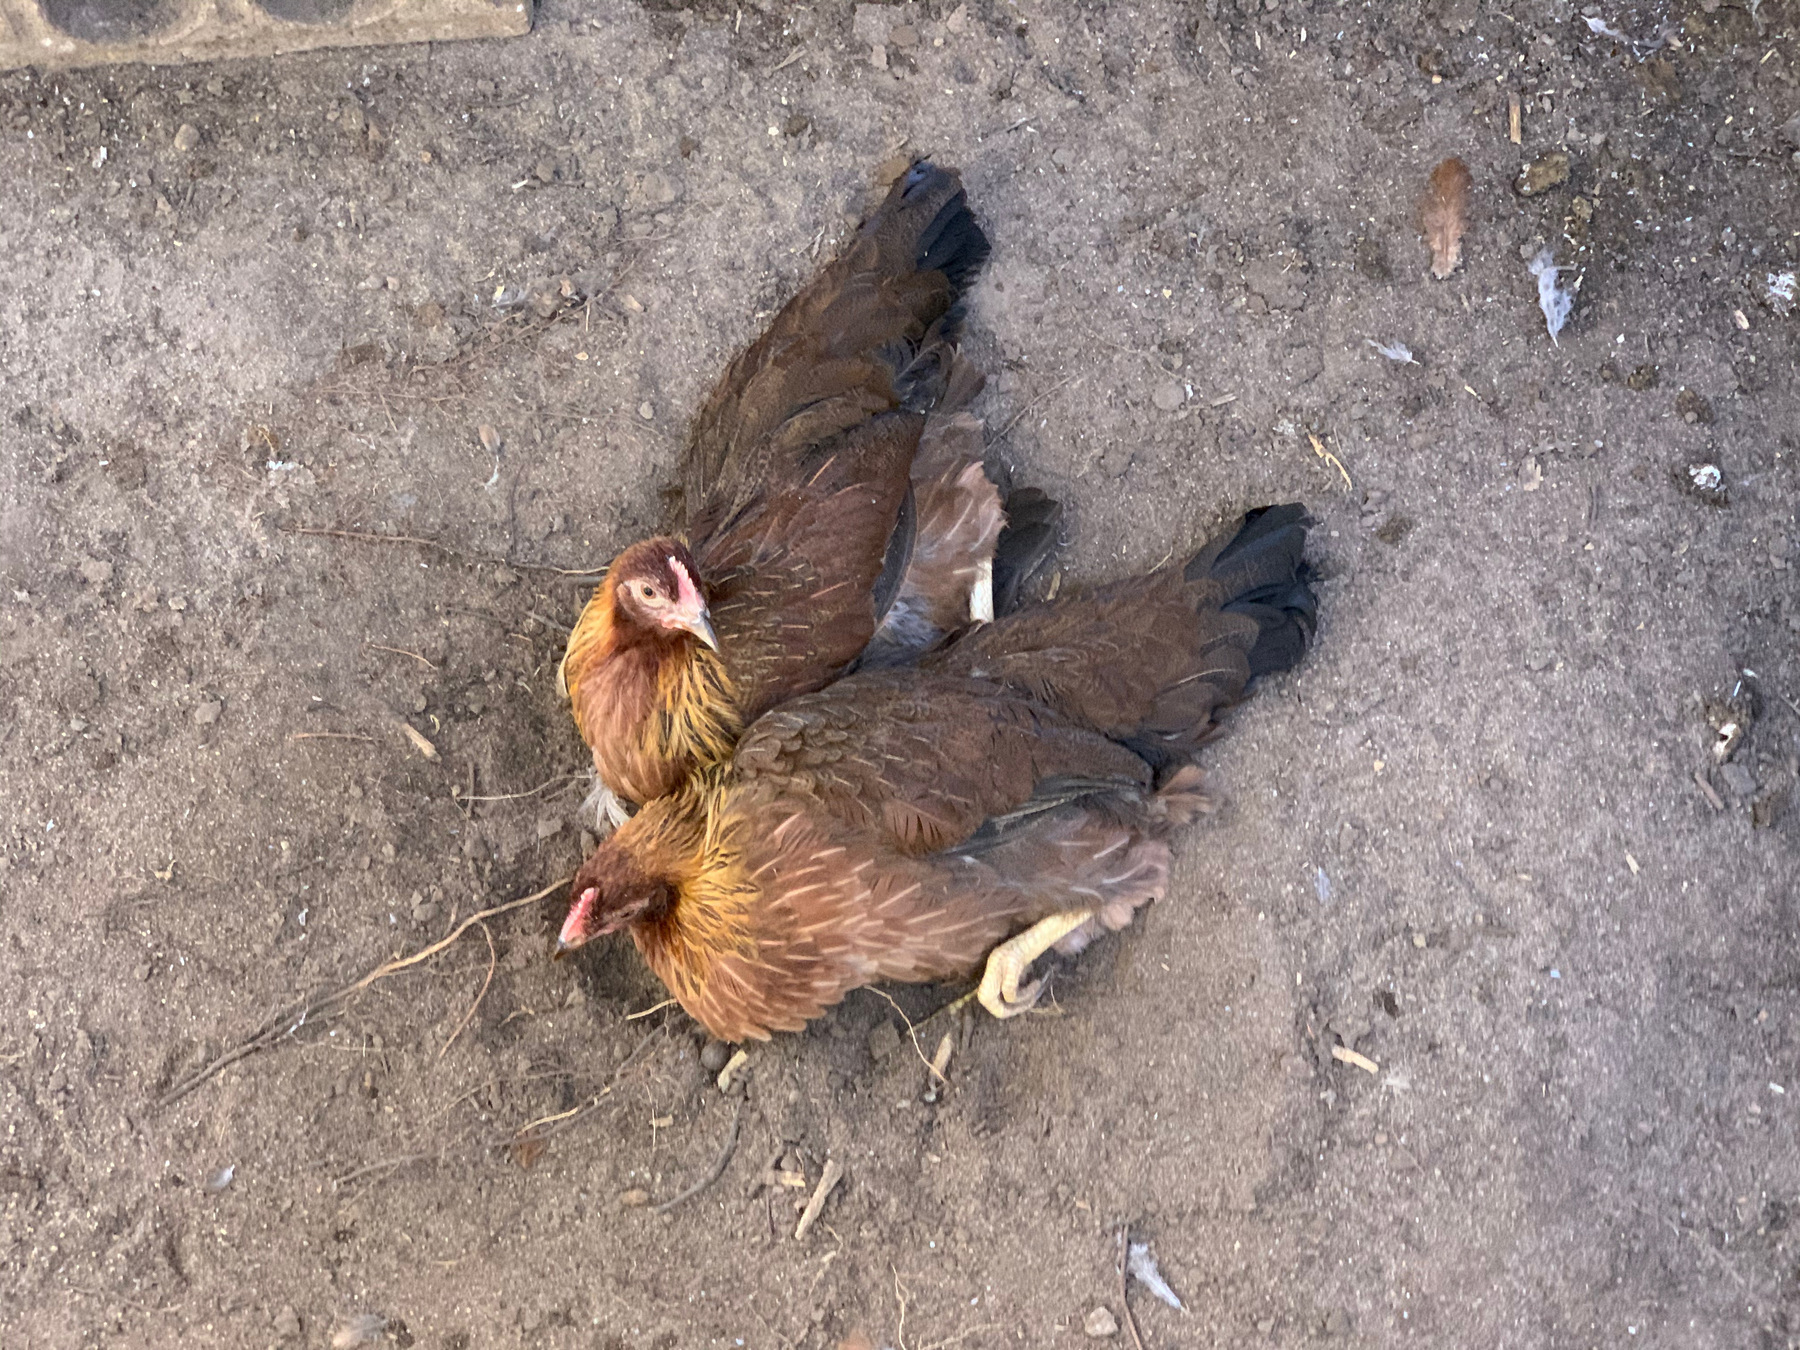 Our newest hens, Cinnamon and Hashbrown, enjoying a dust bath